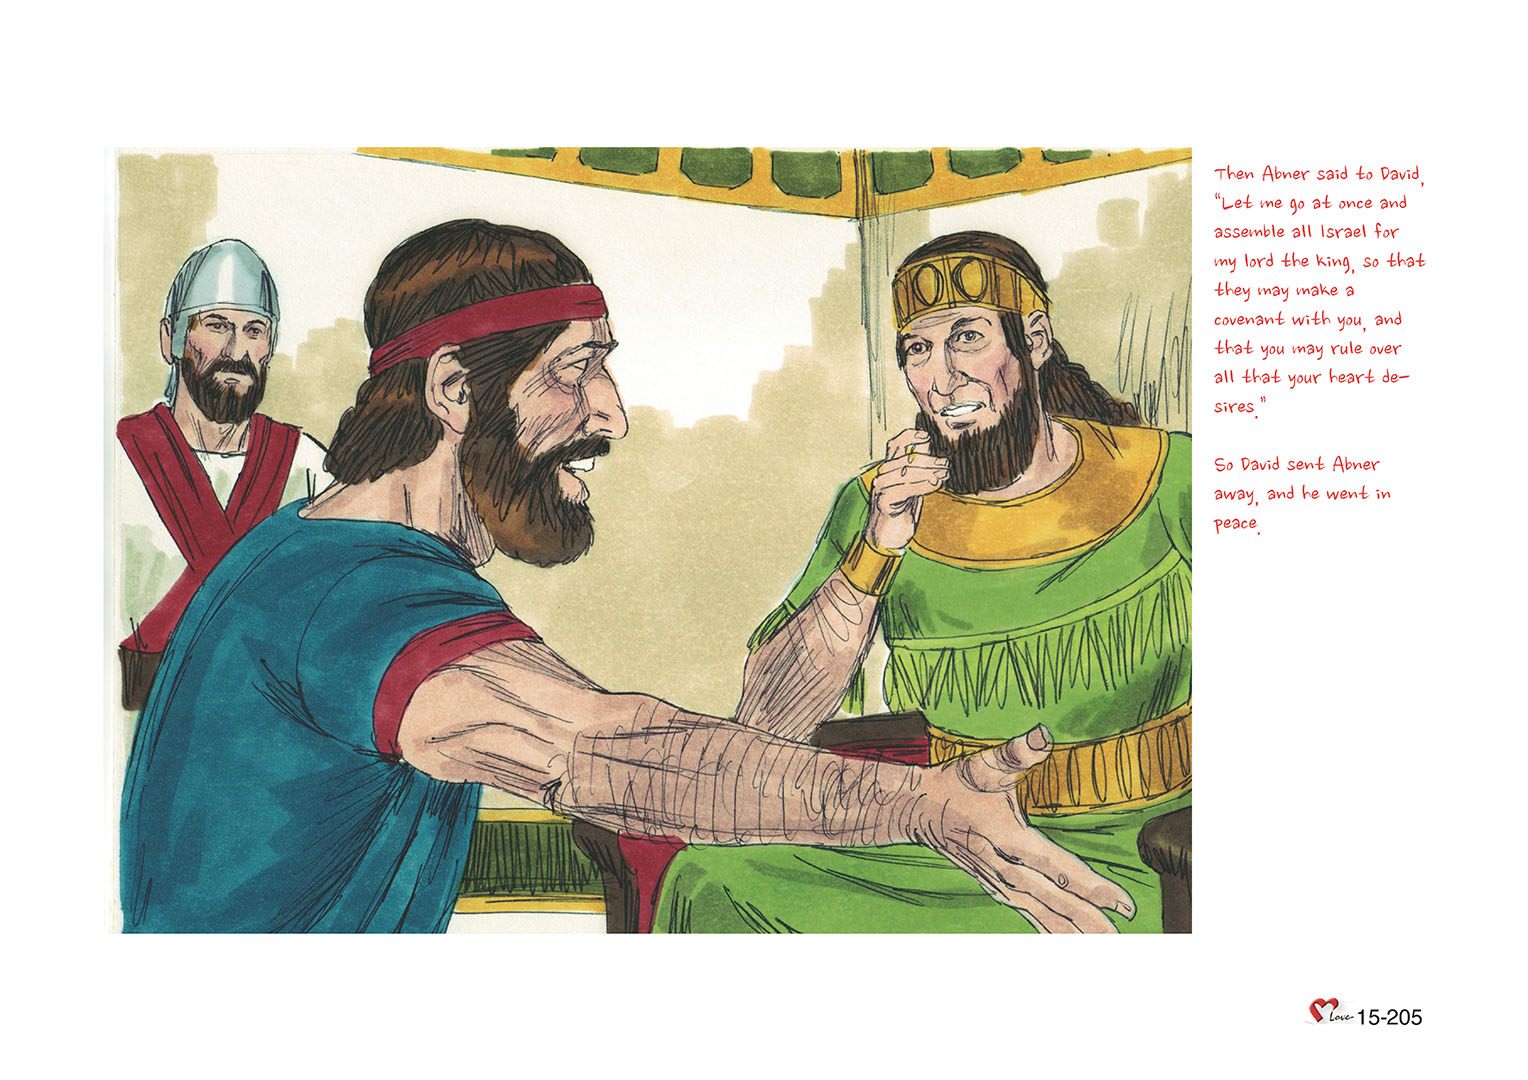 Chapter 15 - Lesson 47 - David became King